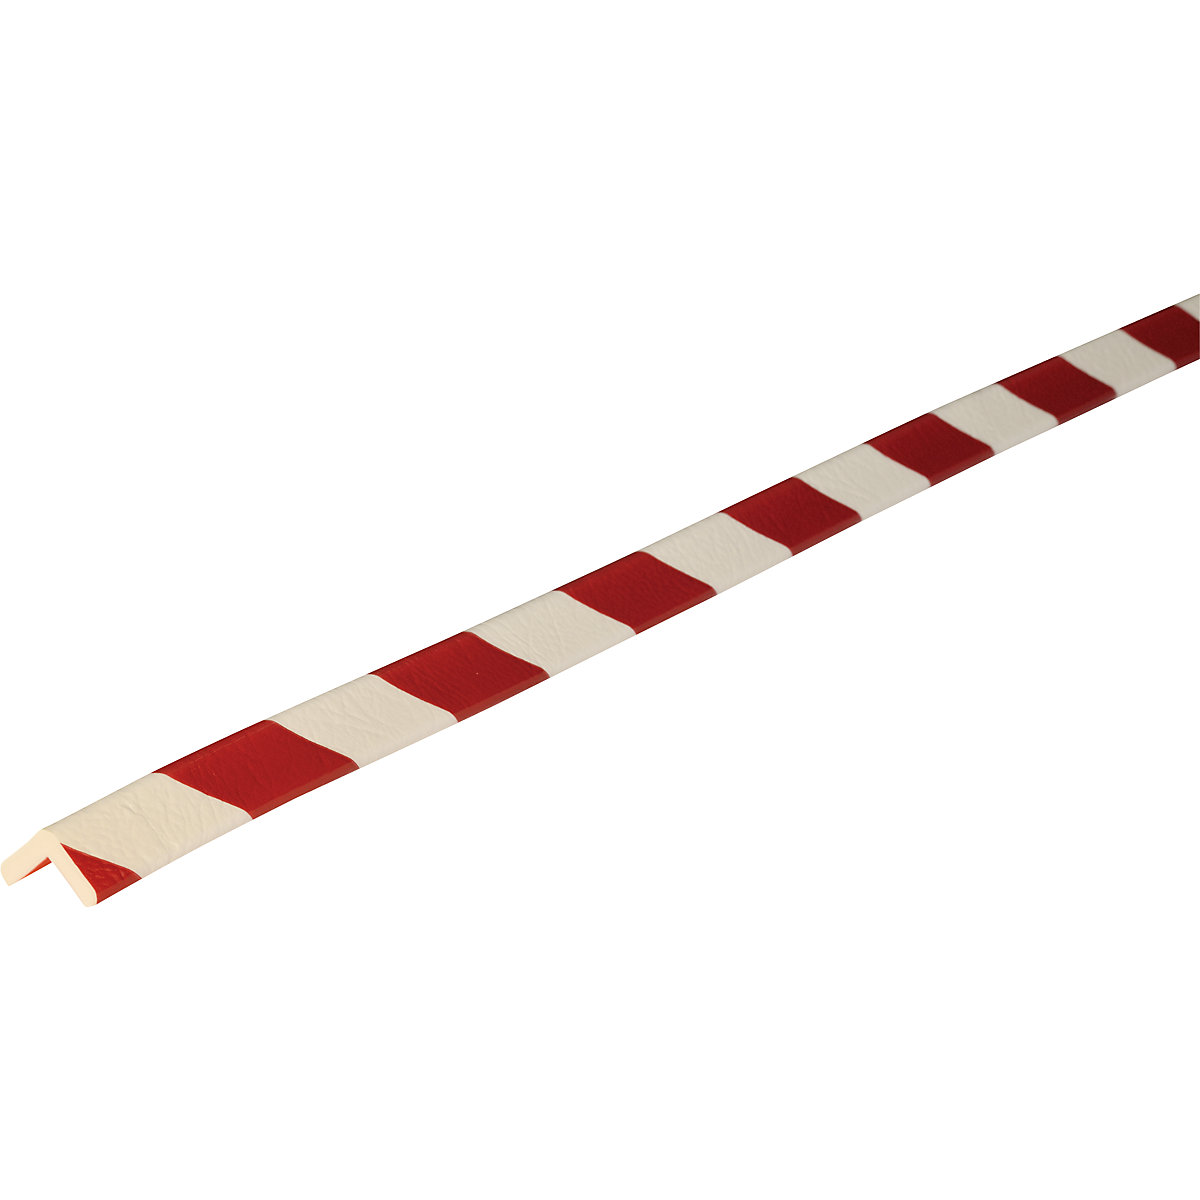 Knuffi®-hoekbescherming – SHG, type E, 1 rol à 5 m, rood/wit-13